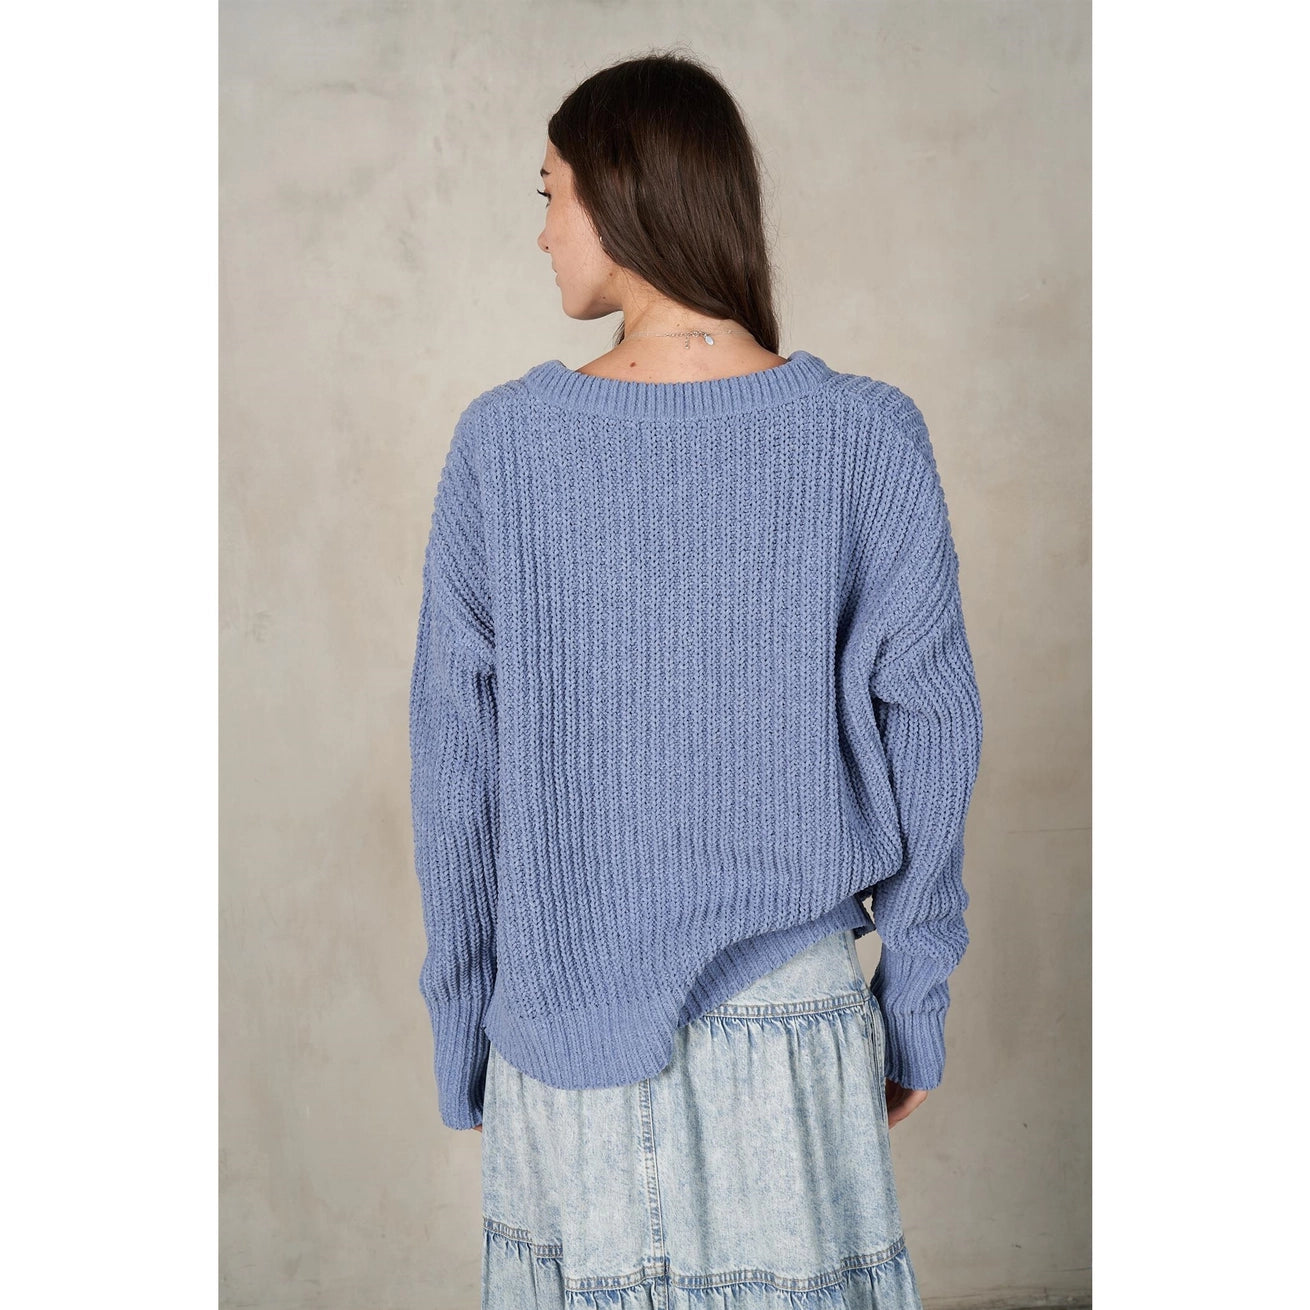 LALAMIA V-Neck Long Sleeve Knit Sweater